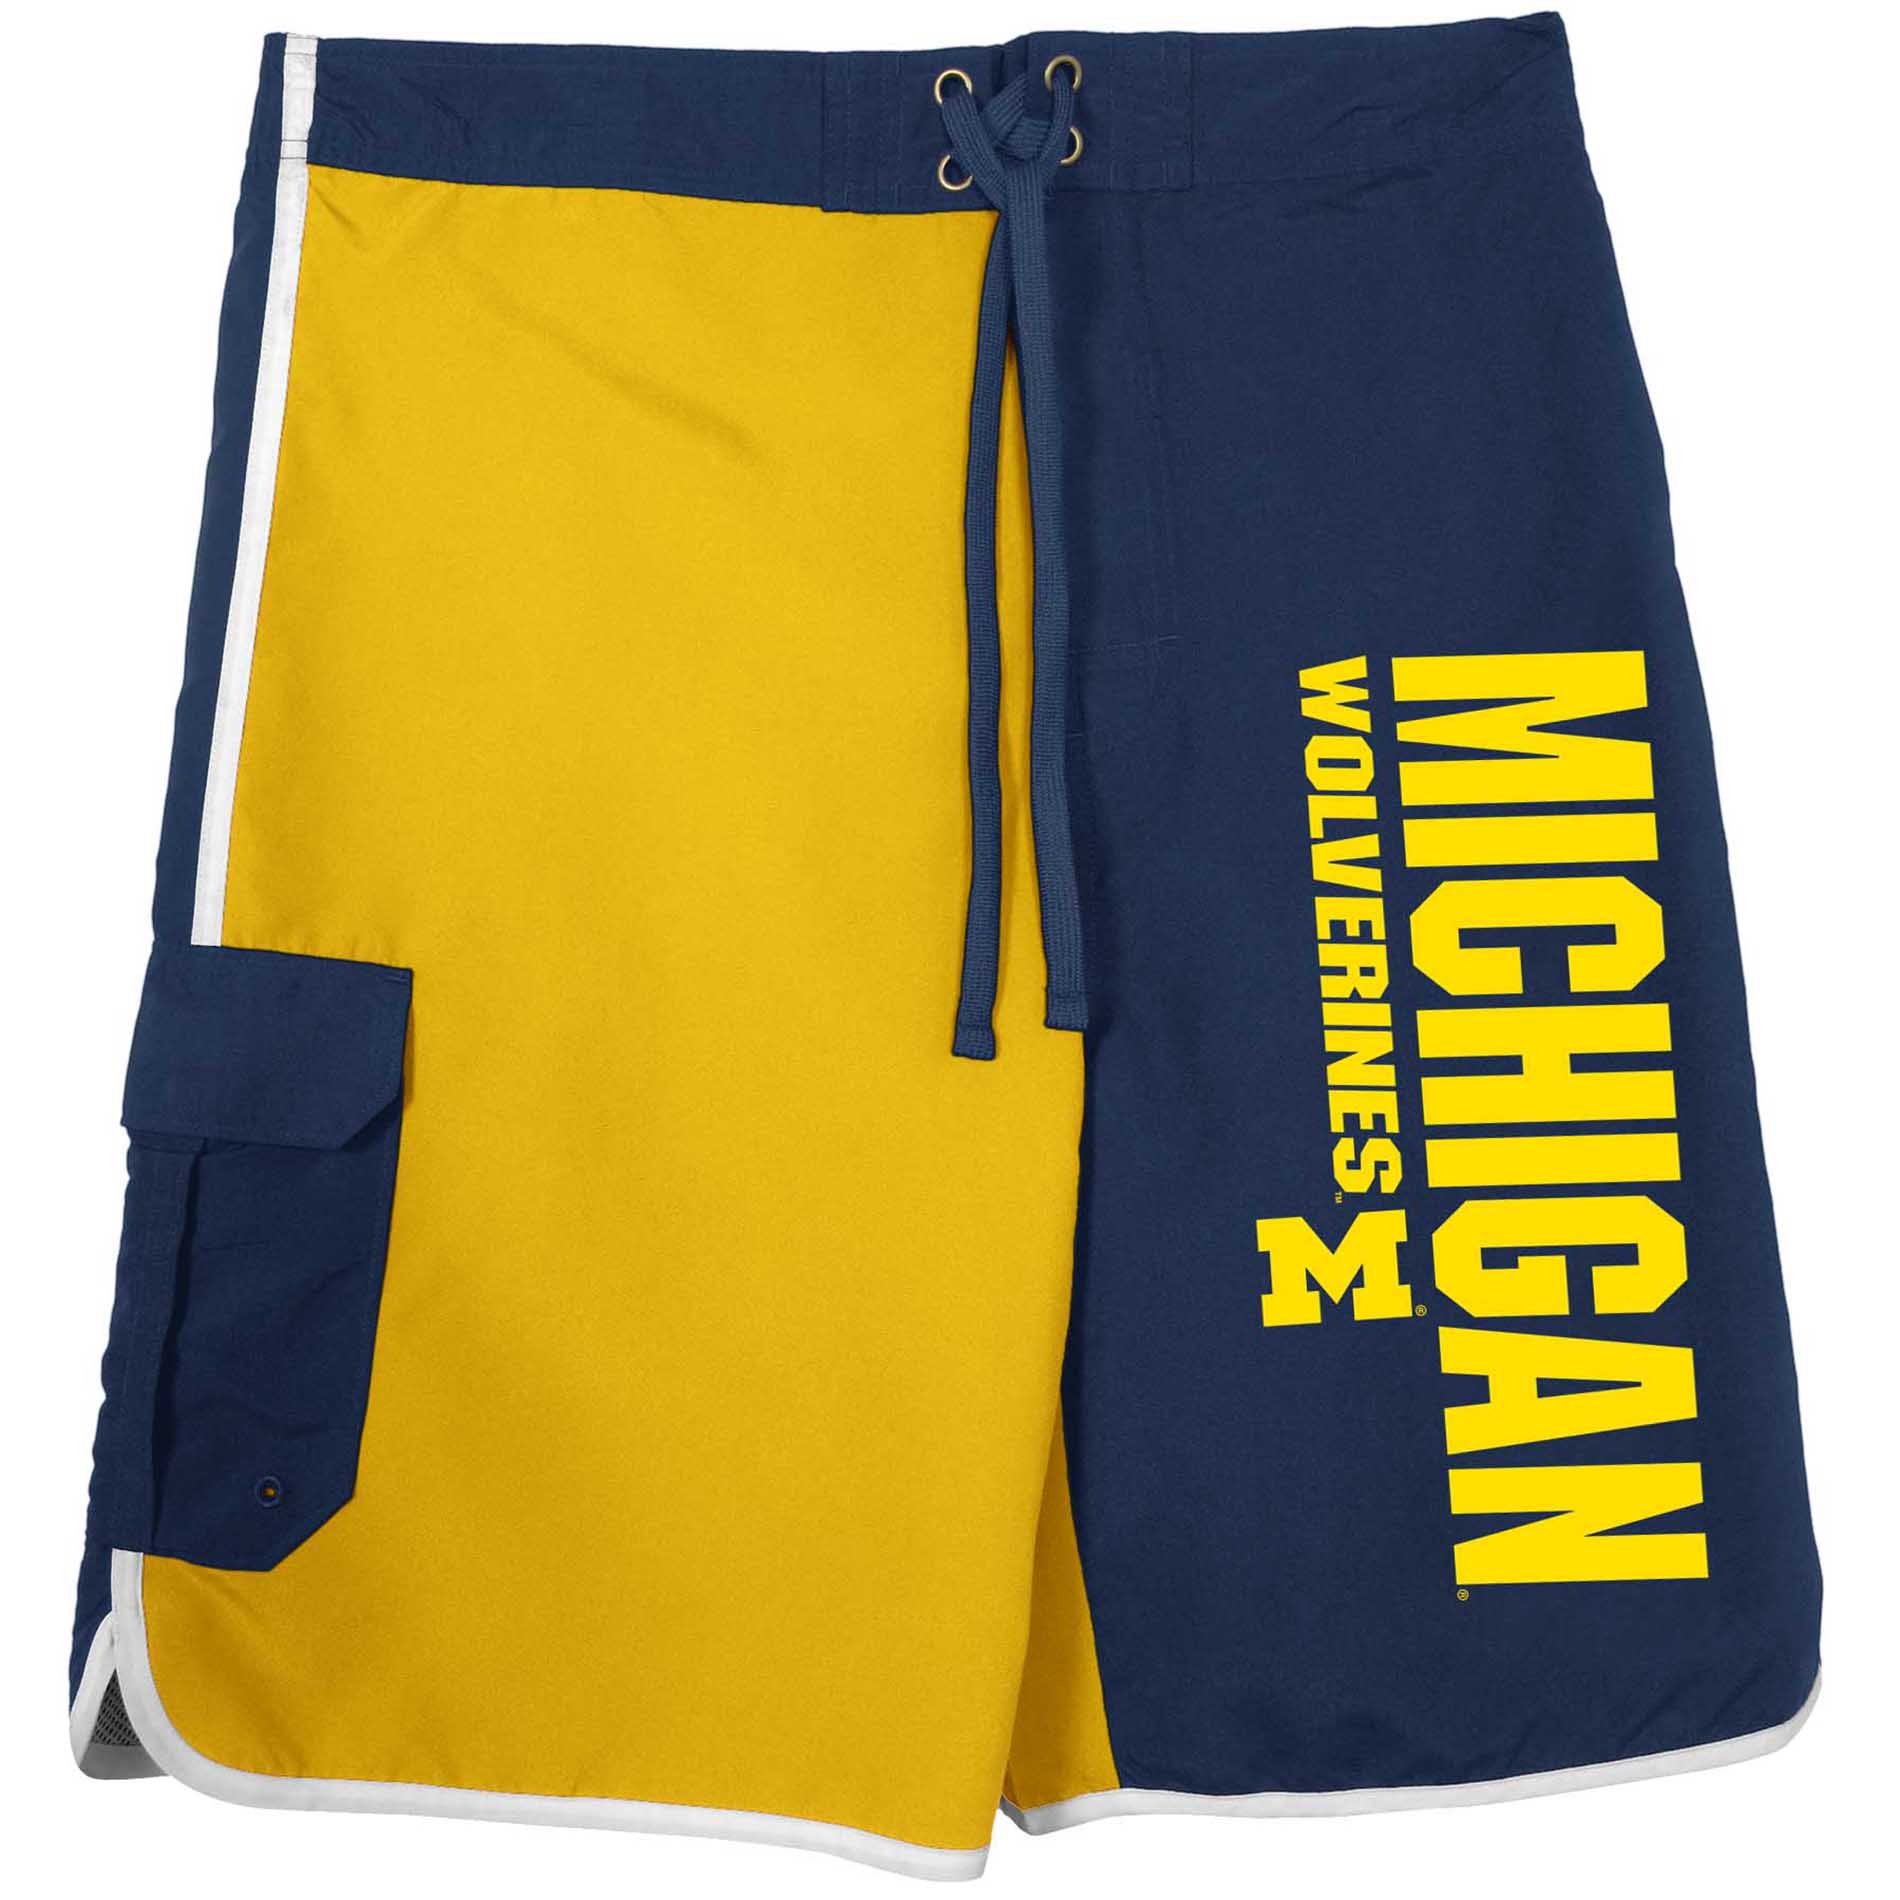 NCAA Men's' Michigan Wolverines Board Shorts